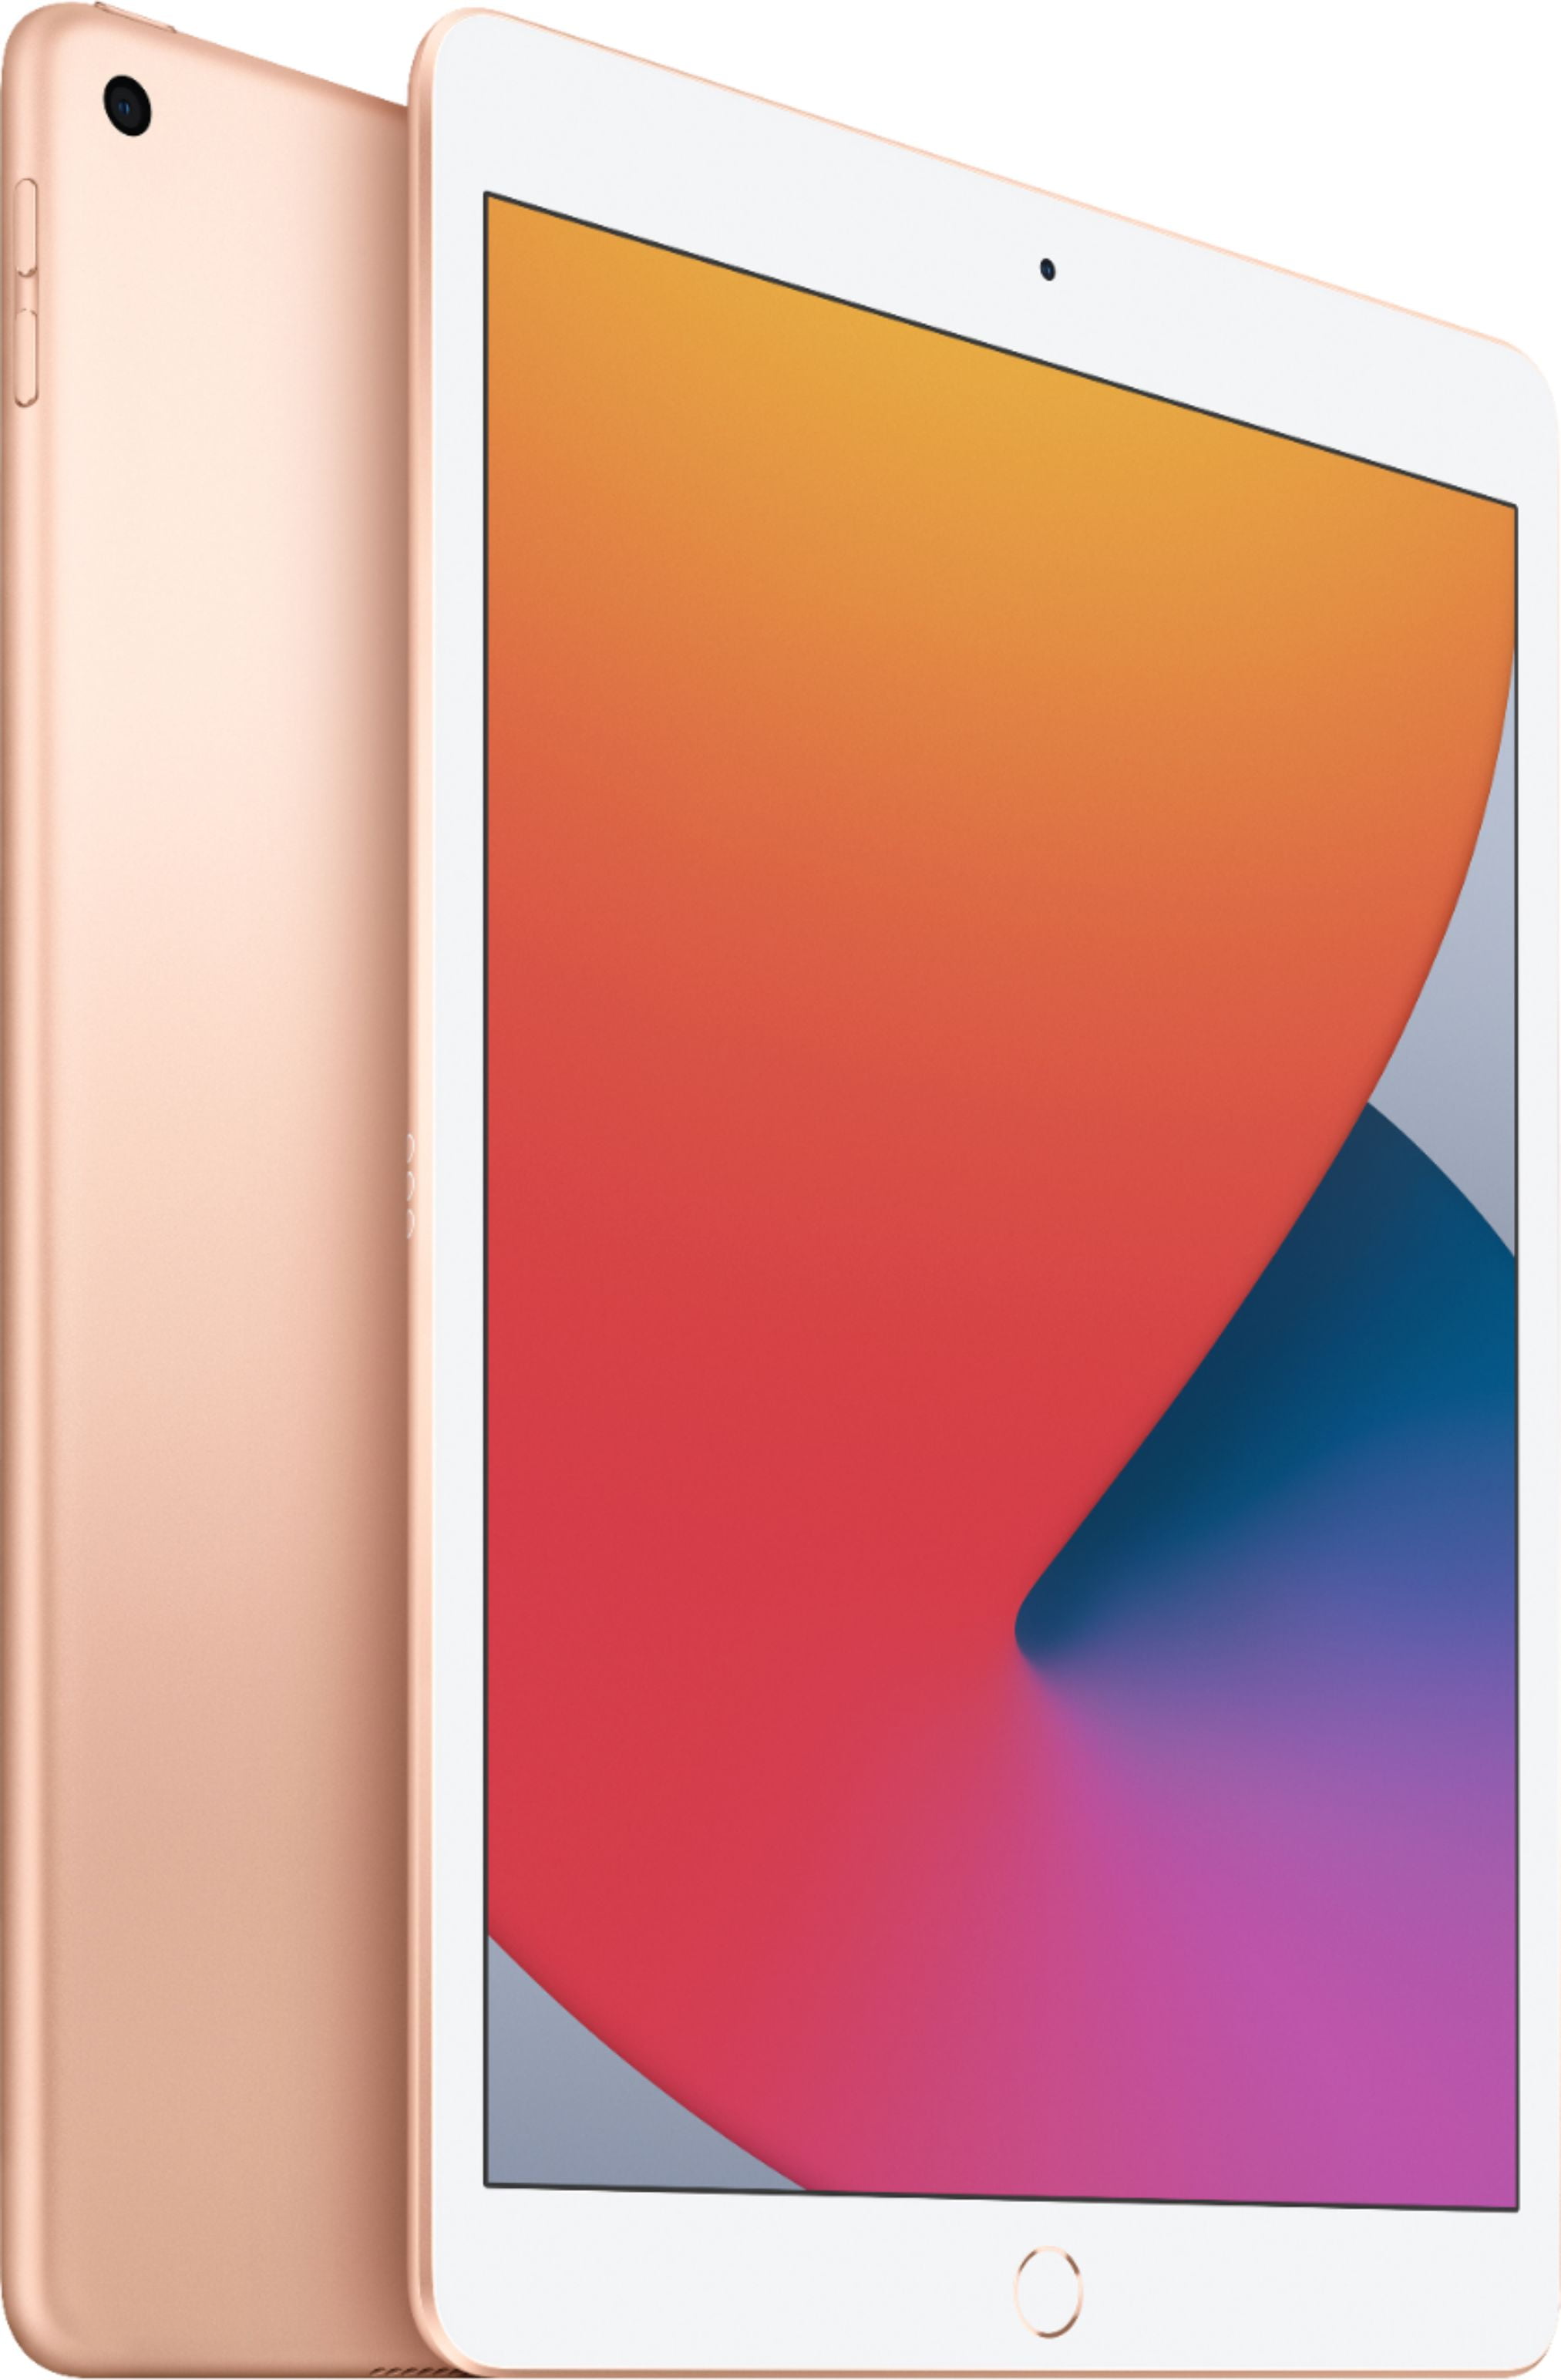 Apple iPad (10.2-in, Wi-Fi, 32GB) - Gold (8th Gen, 2020) (Renewed) -  Walmart.com